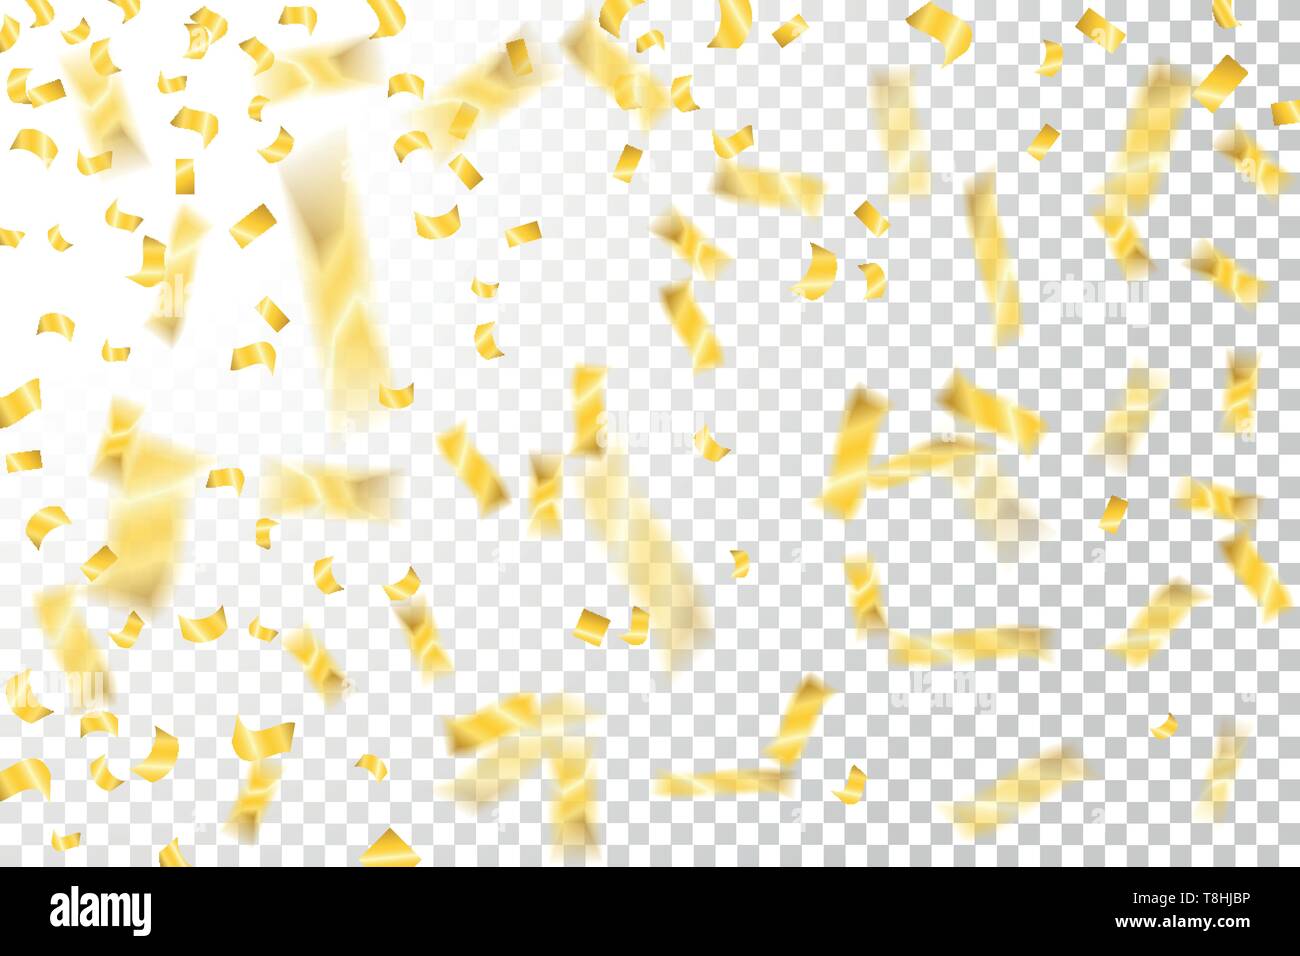 falling confetti gold vector Stock Vector